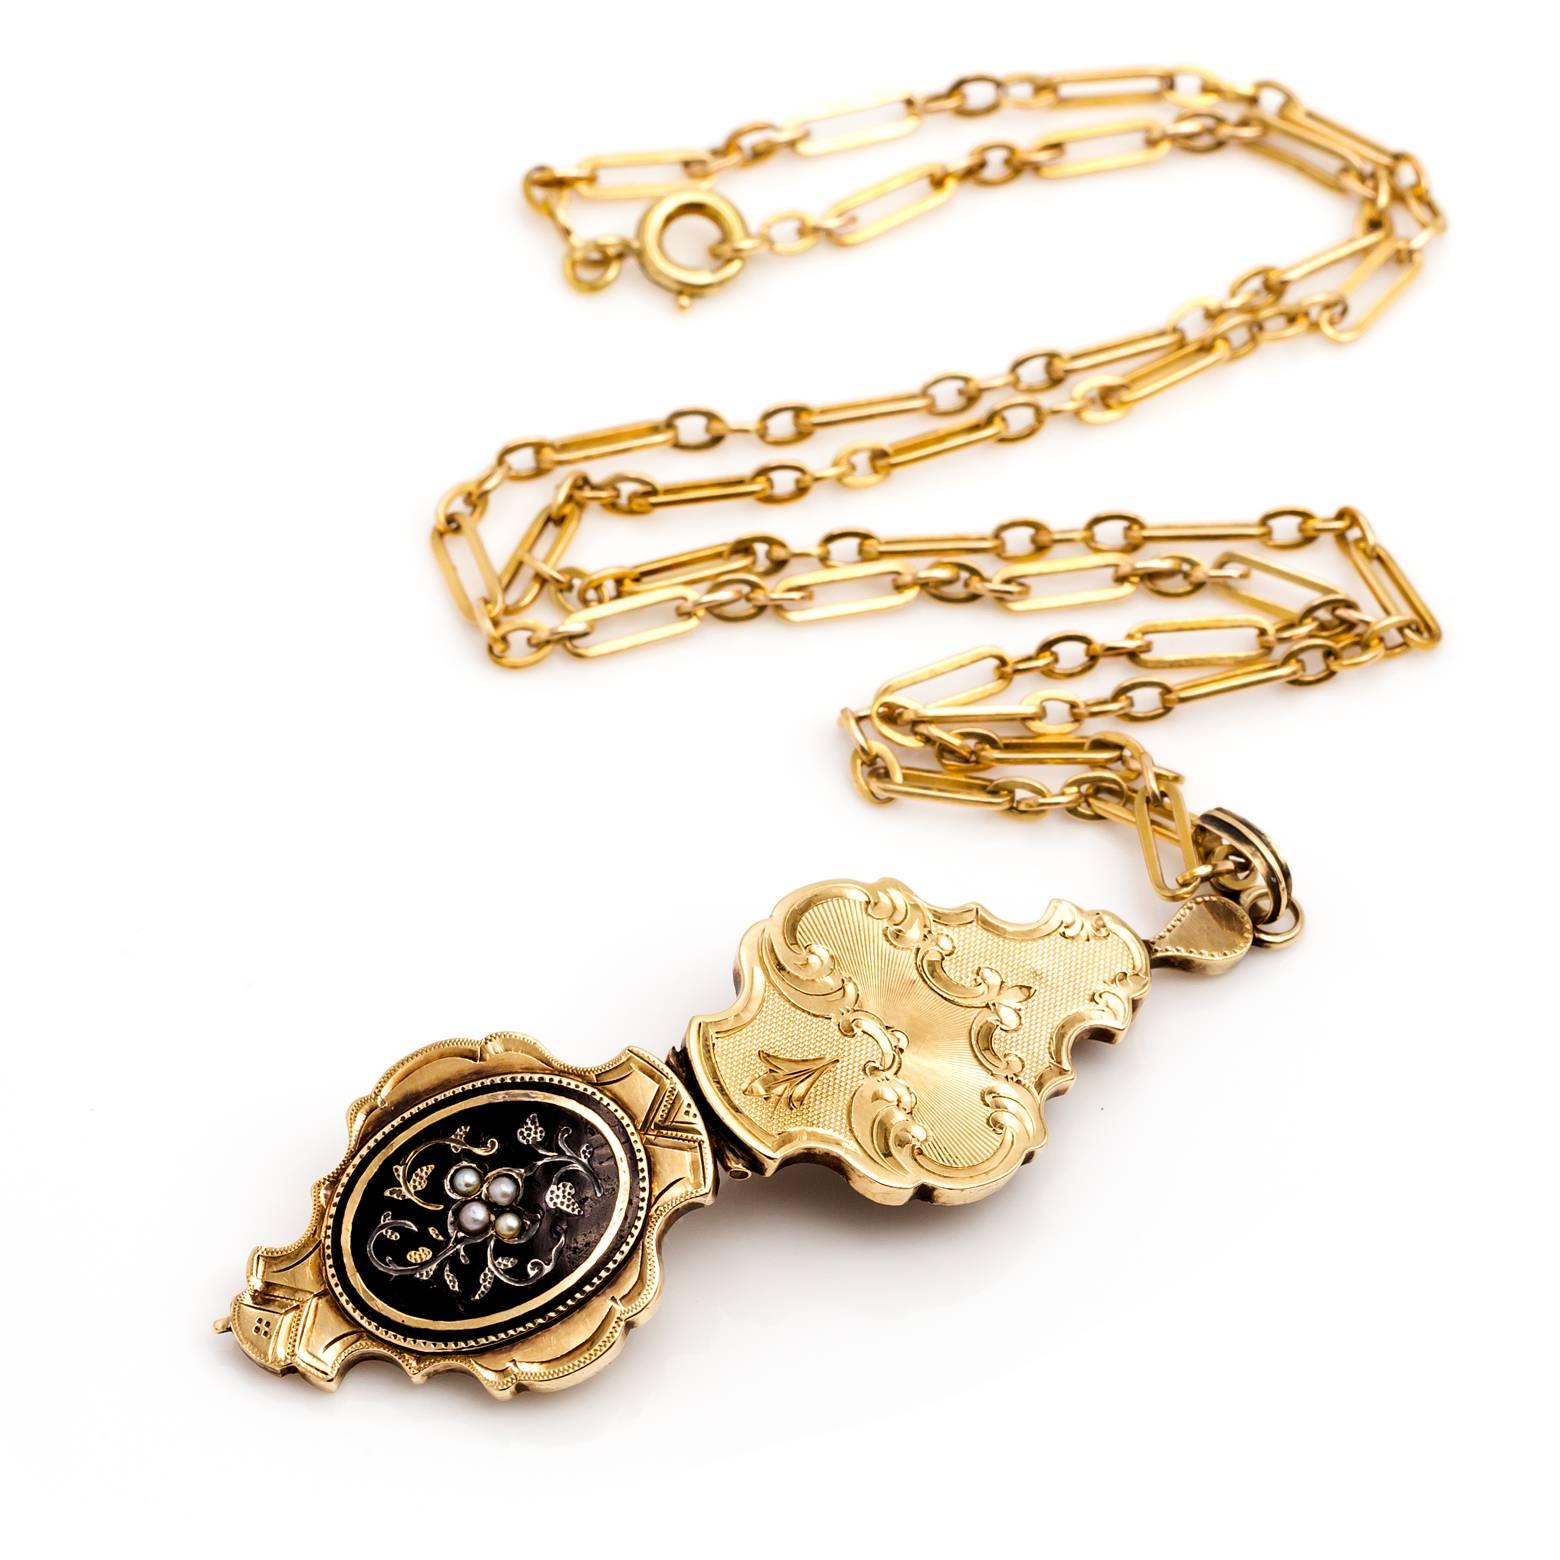 Antique Black Enamel, Pearl and Gold Locket in a Floral Design For Sale 4